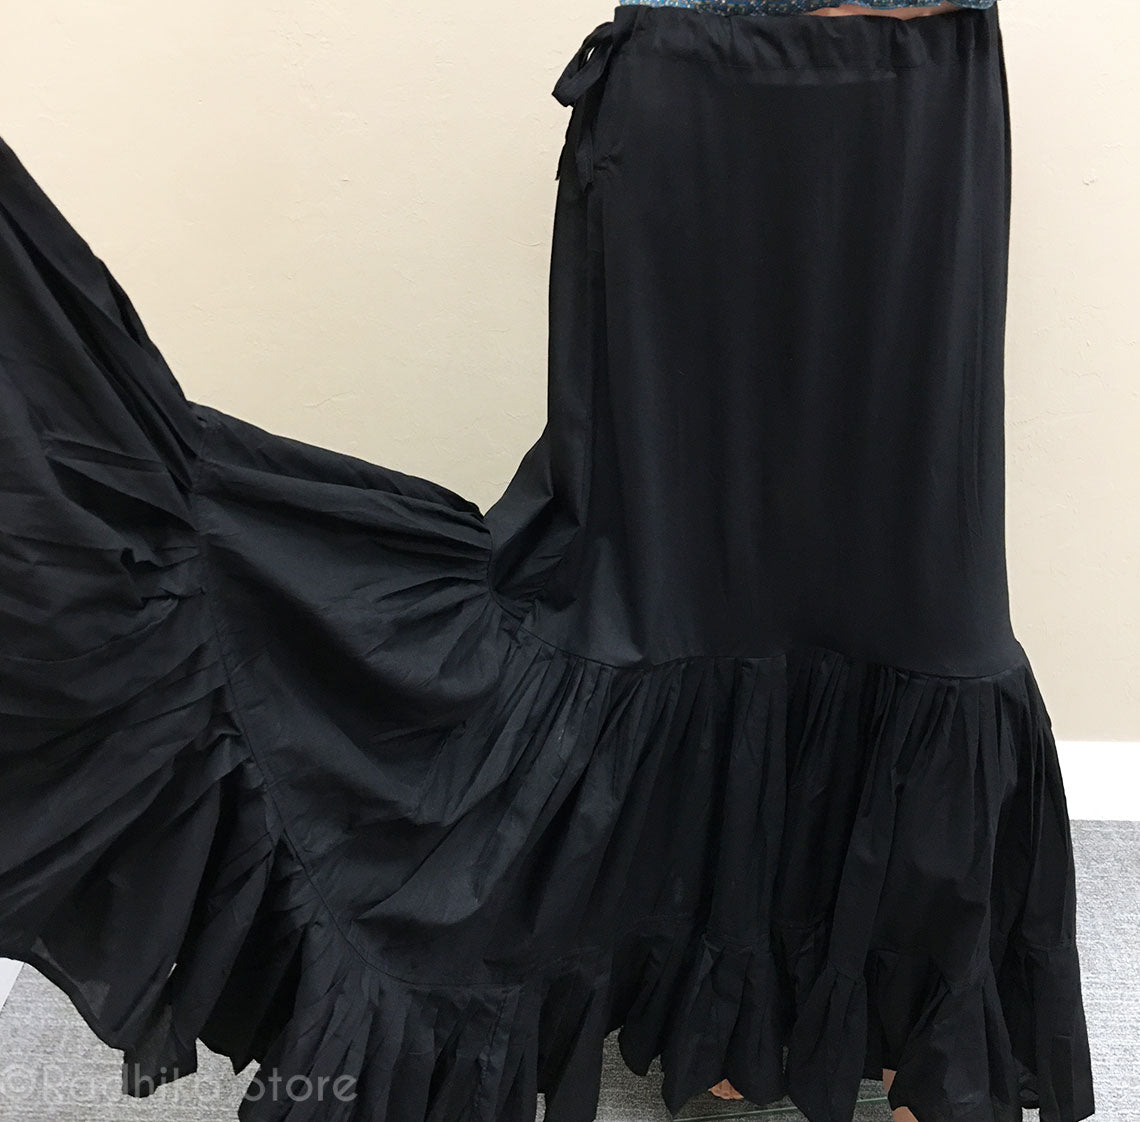 Black Cotton Twirling Petticoat/ Slip - S, M, L (8 Meters Fabric)